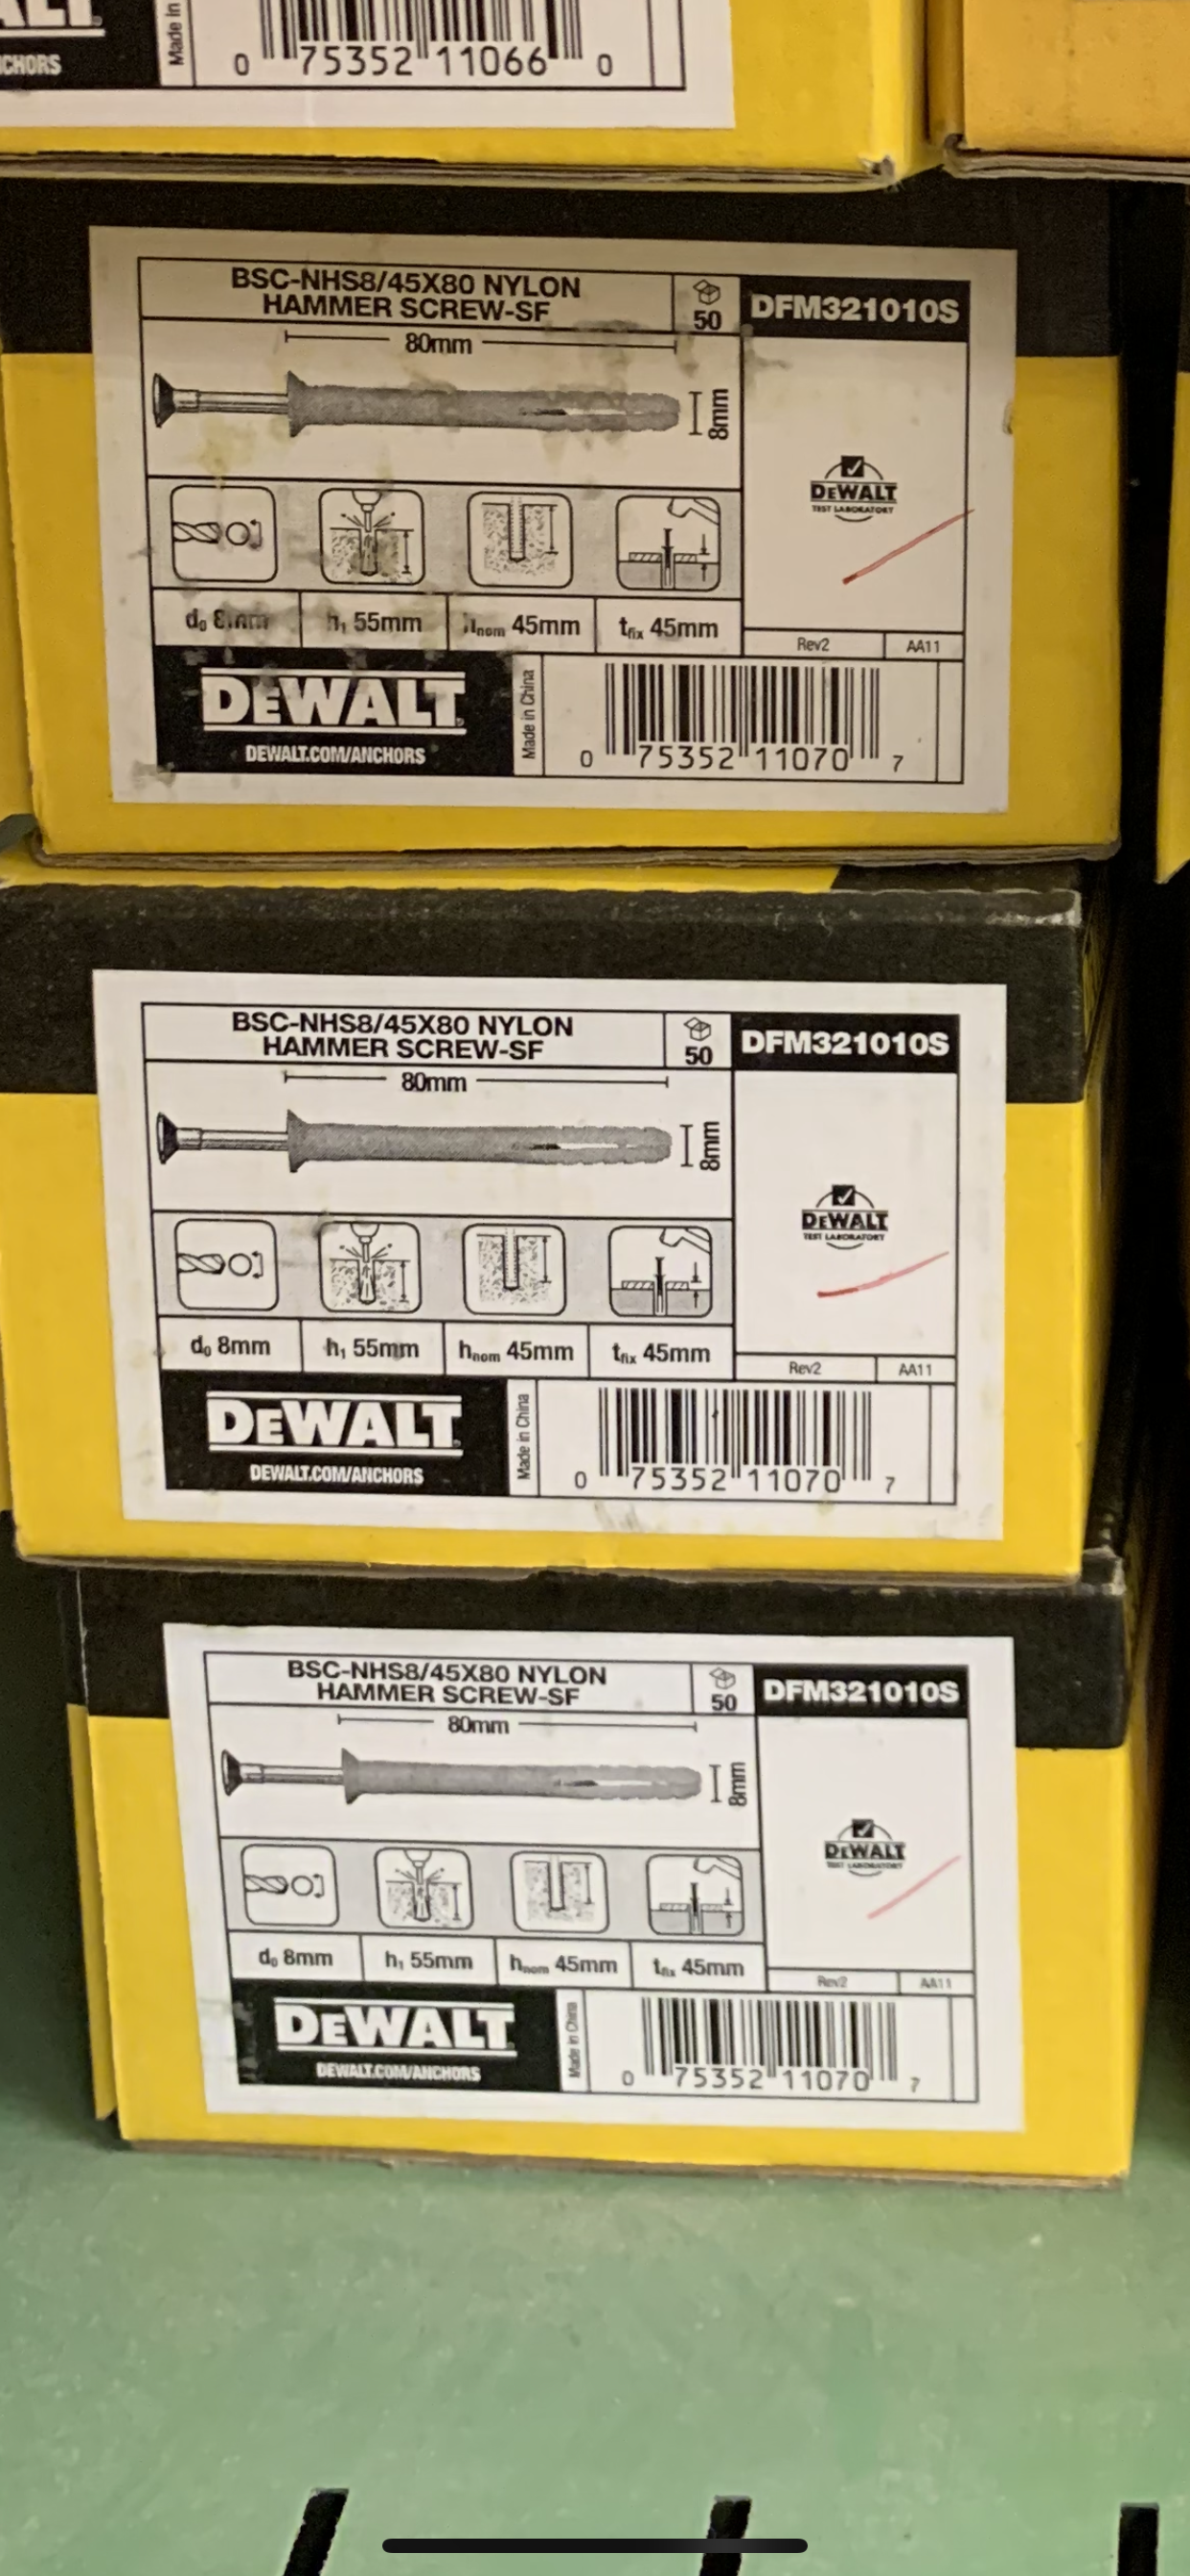 DeWalt DFM321010S BSC-NHS8/45x80 Nylon Hammer Screw-SF PK 50 